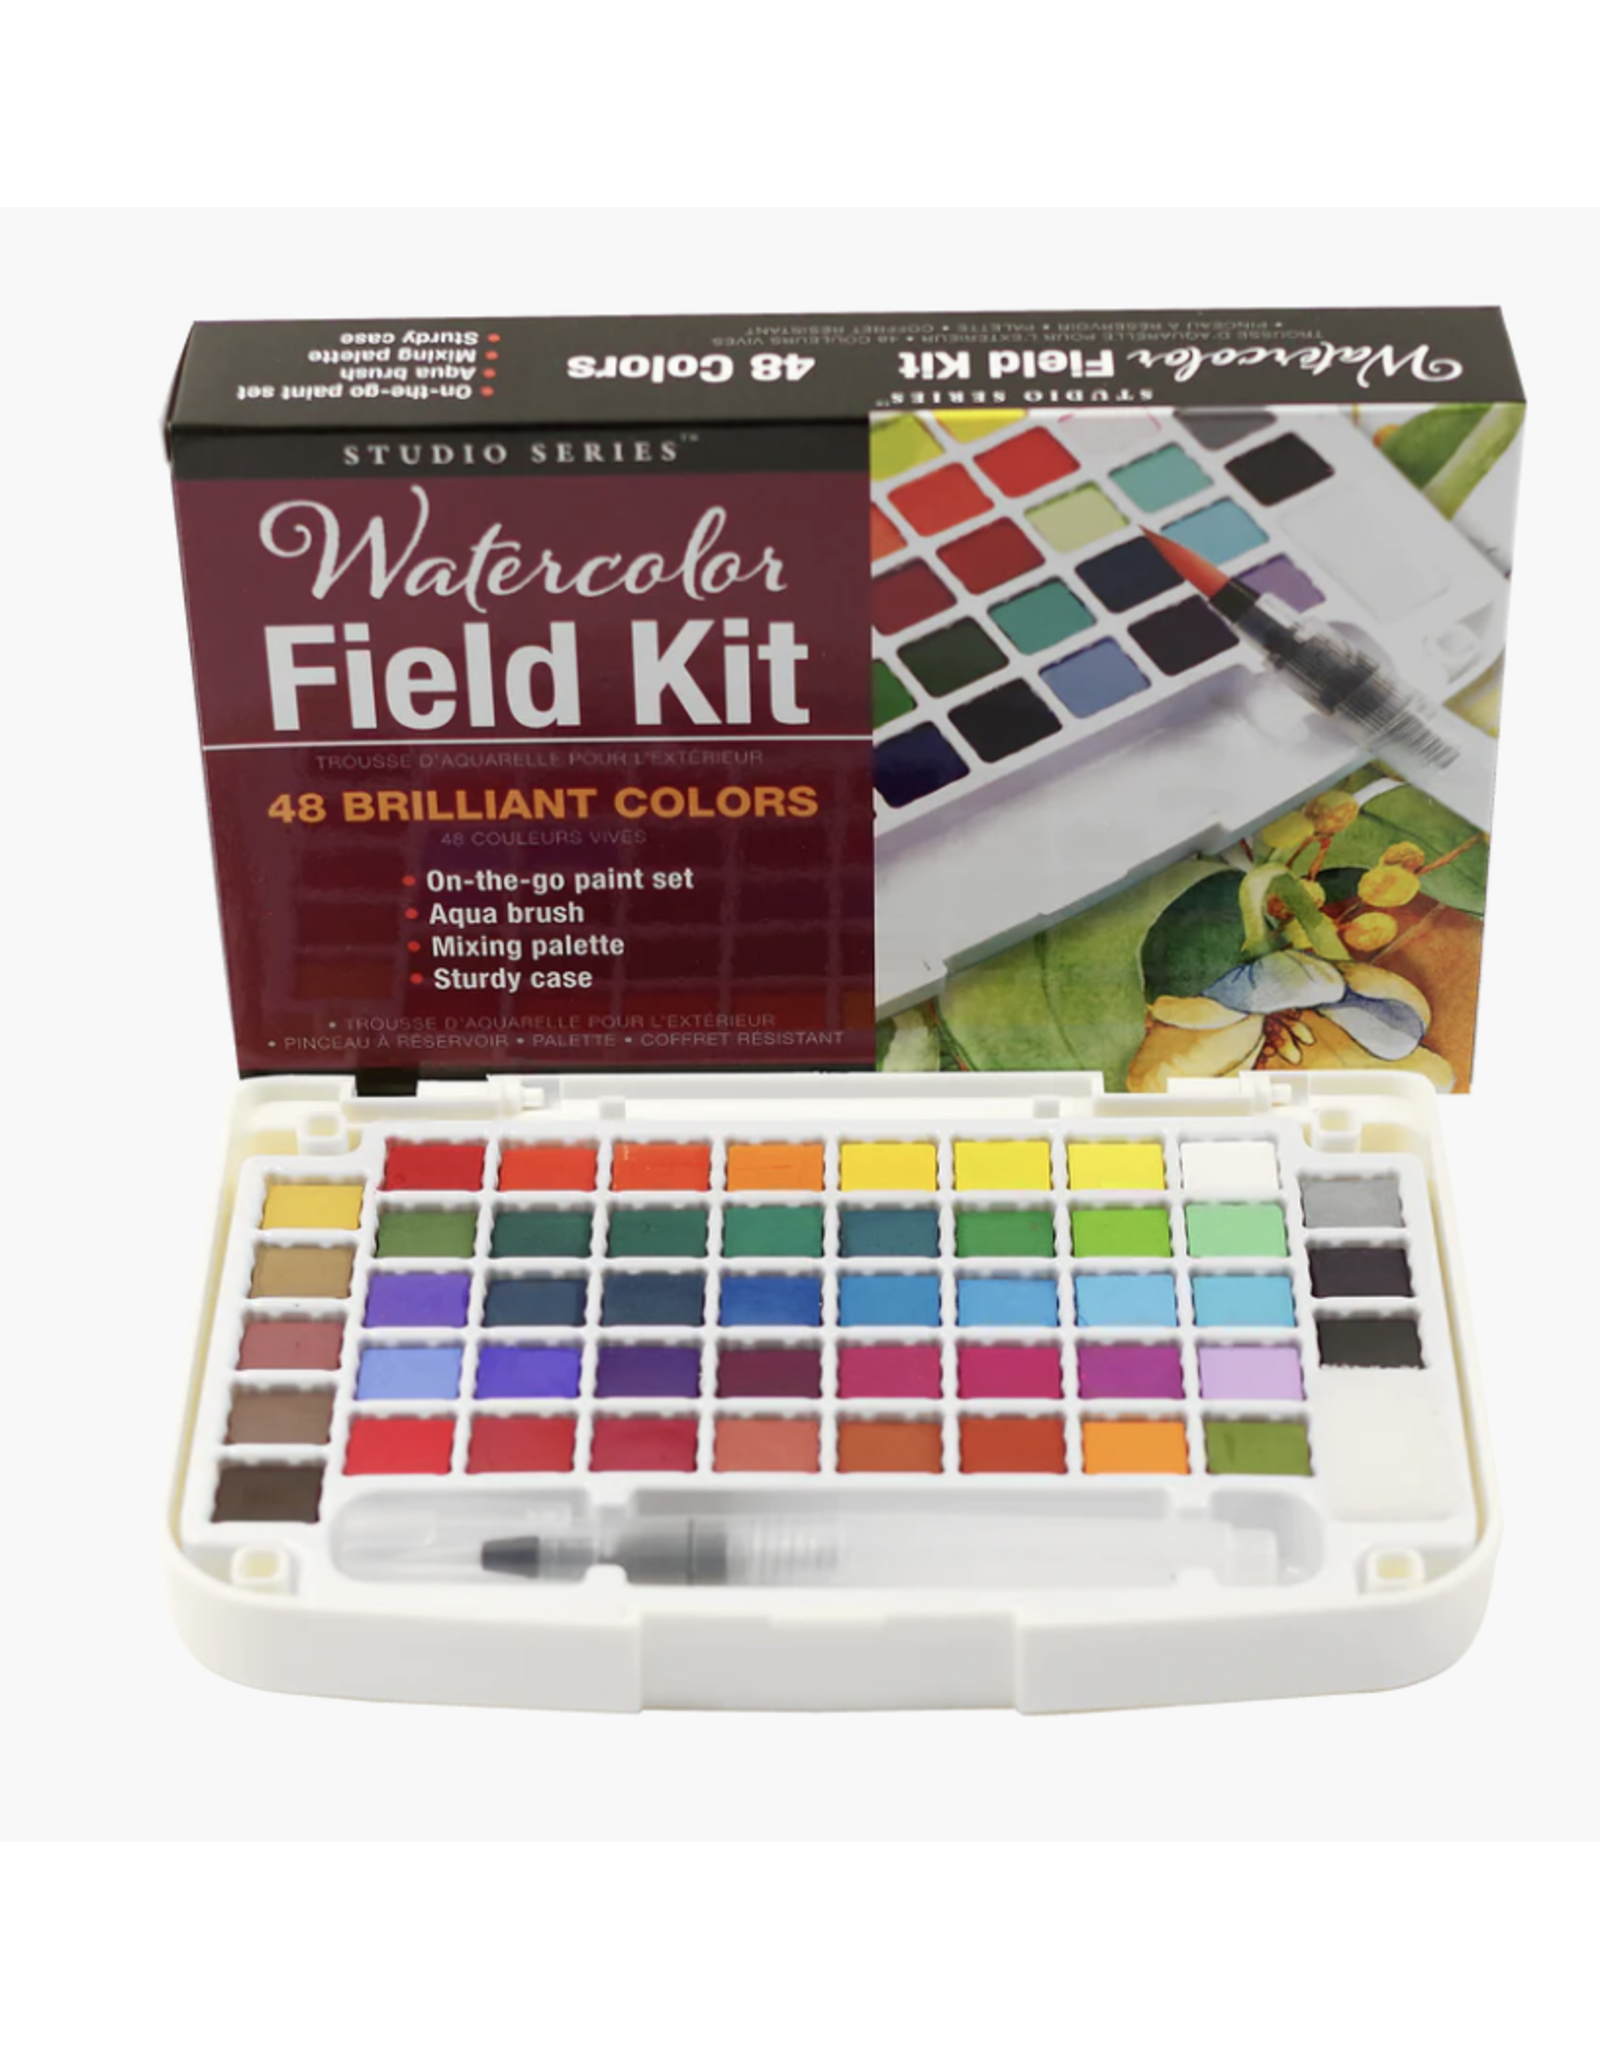 Studio Series Watercolour Field Kit